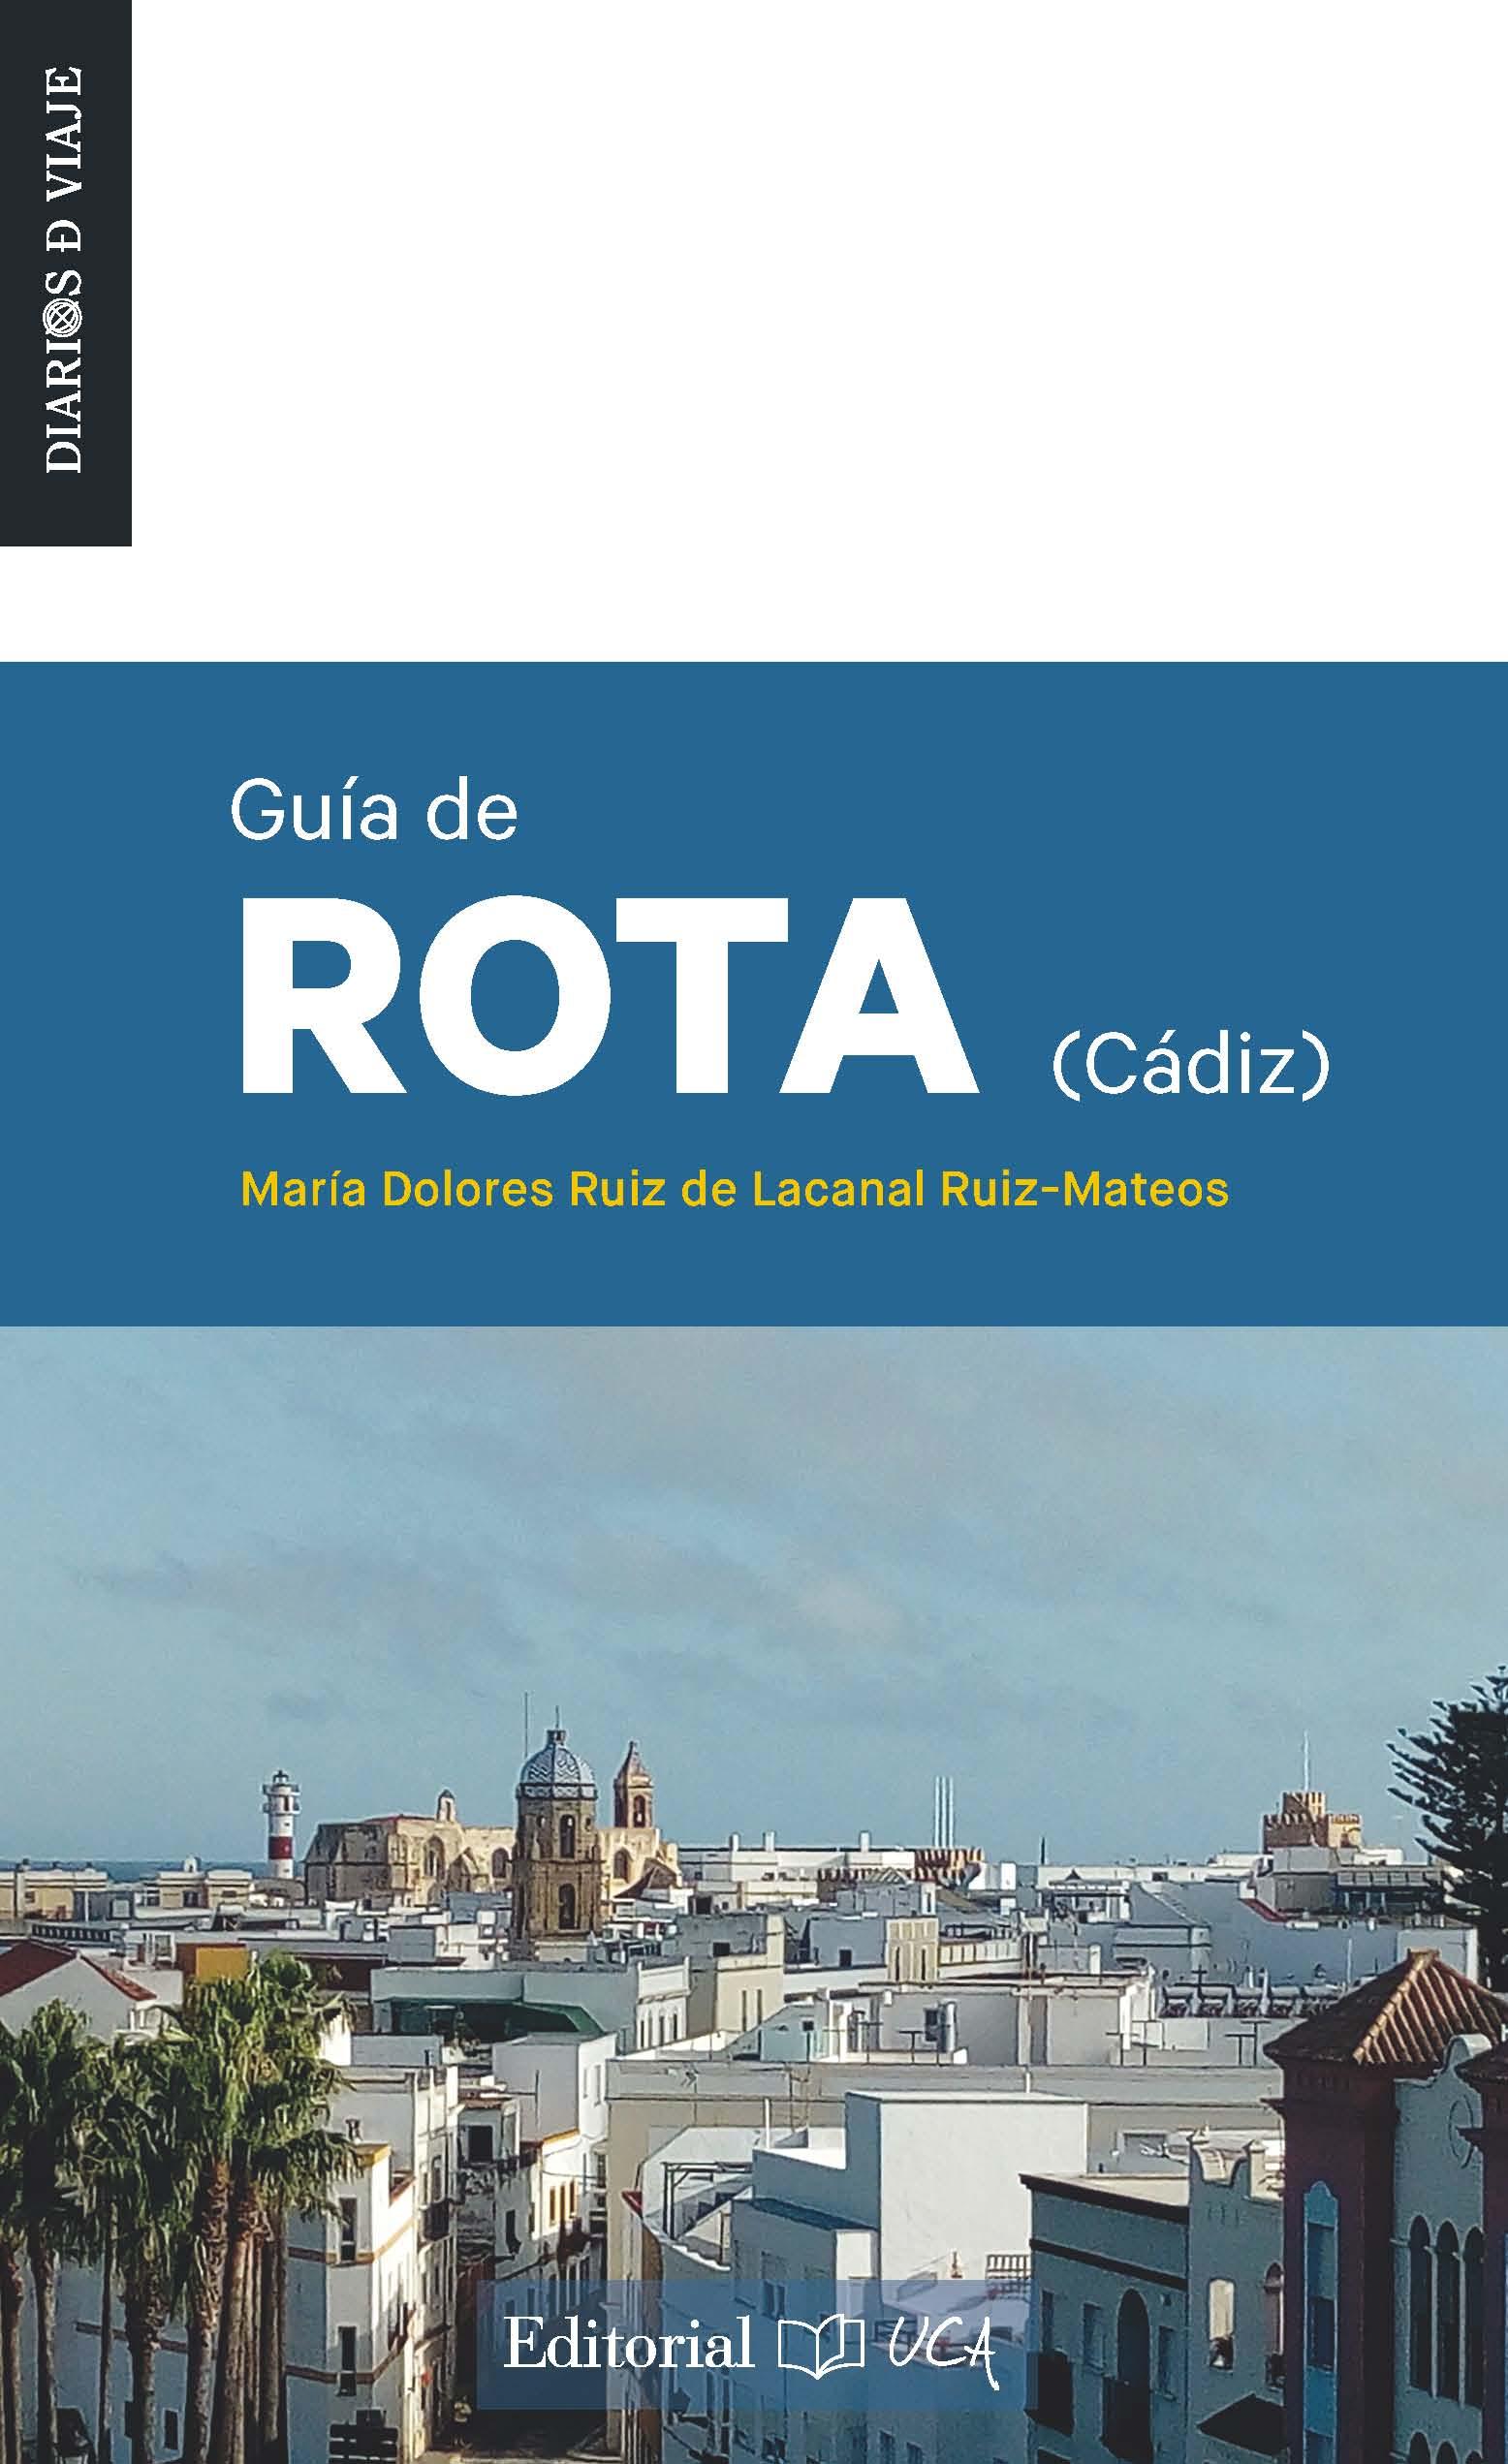 Imagen de portada del libro Guía de Rota (Cádiz)